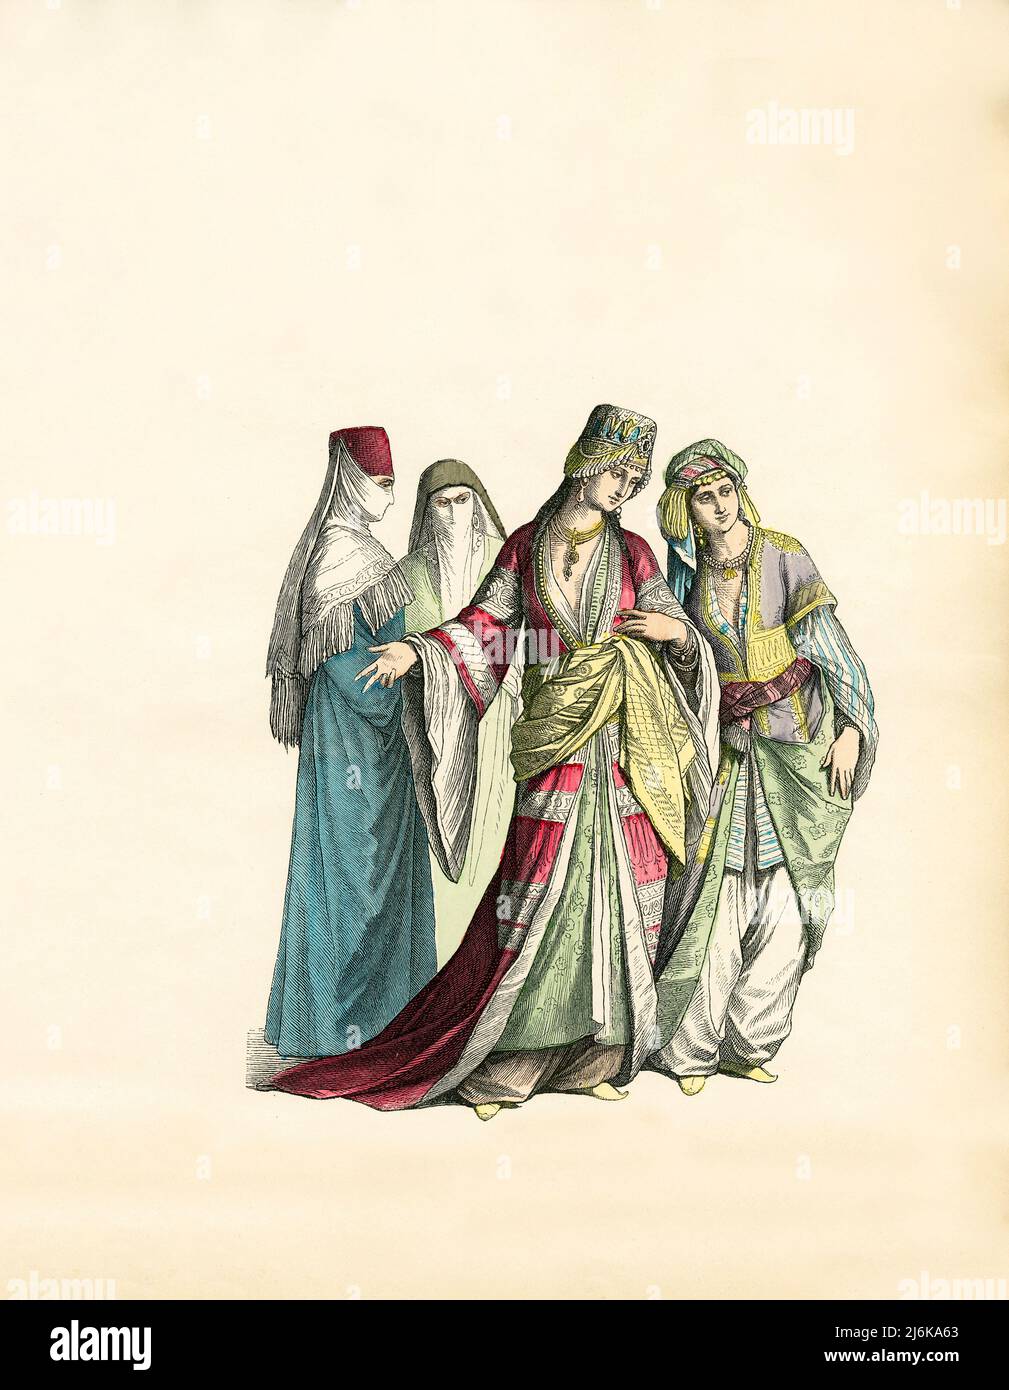 Turkish Women, Illustration, The History of Costume, Braun & Schneider, Munich, Germany, 1861-1880 Stock Photo